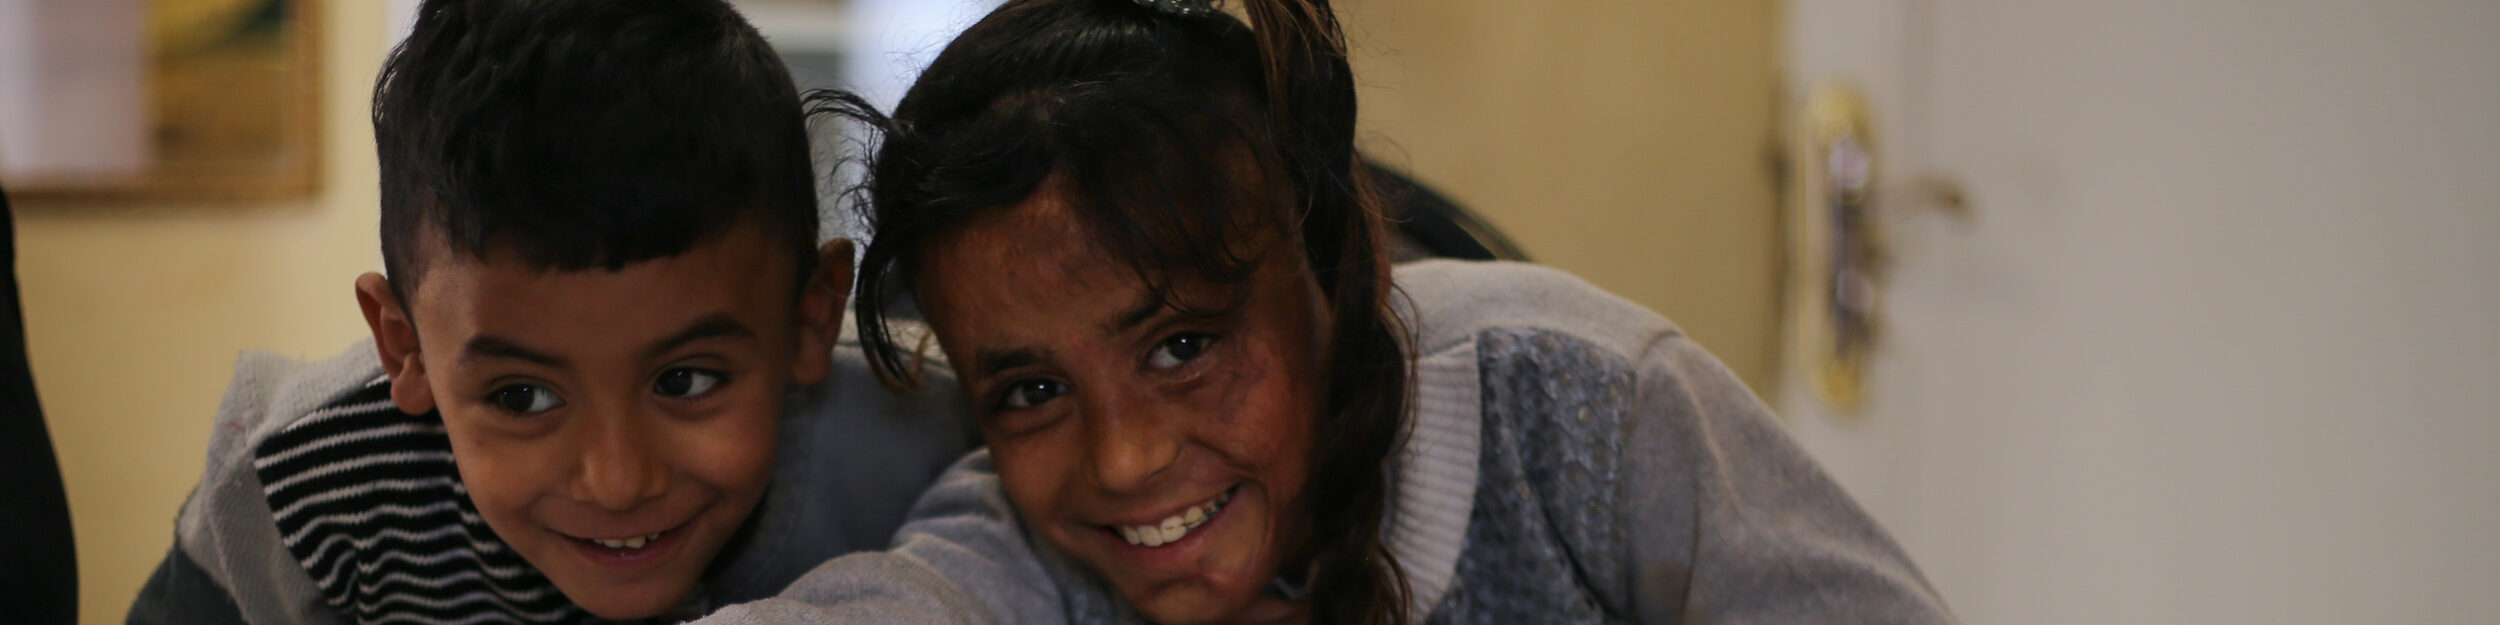 Assuit Burns Programme in Ägypten hilf Kindern wie Noran